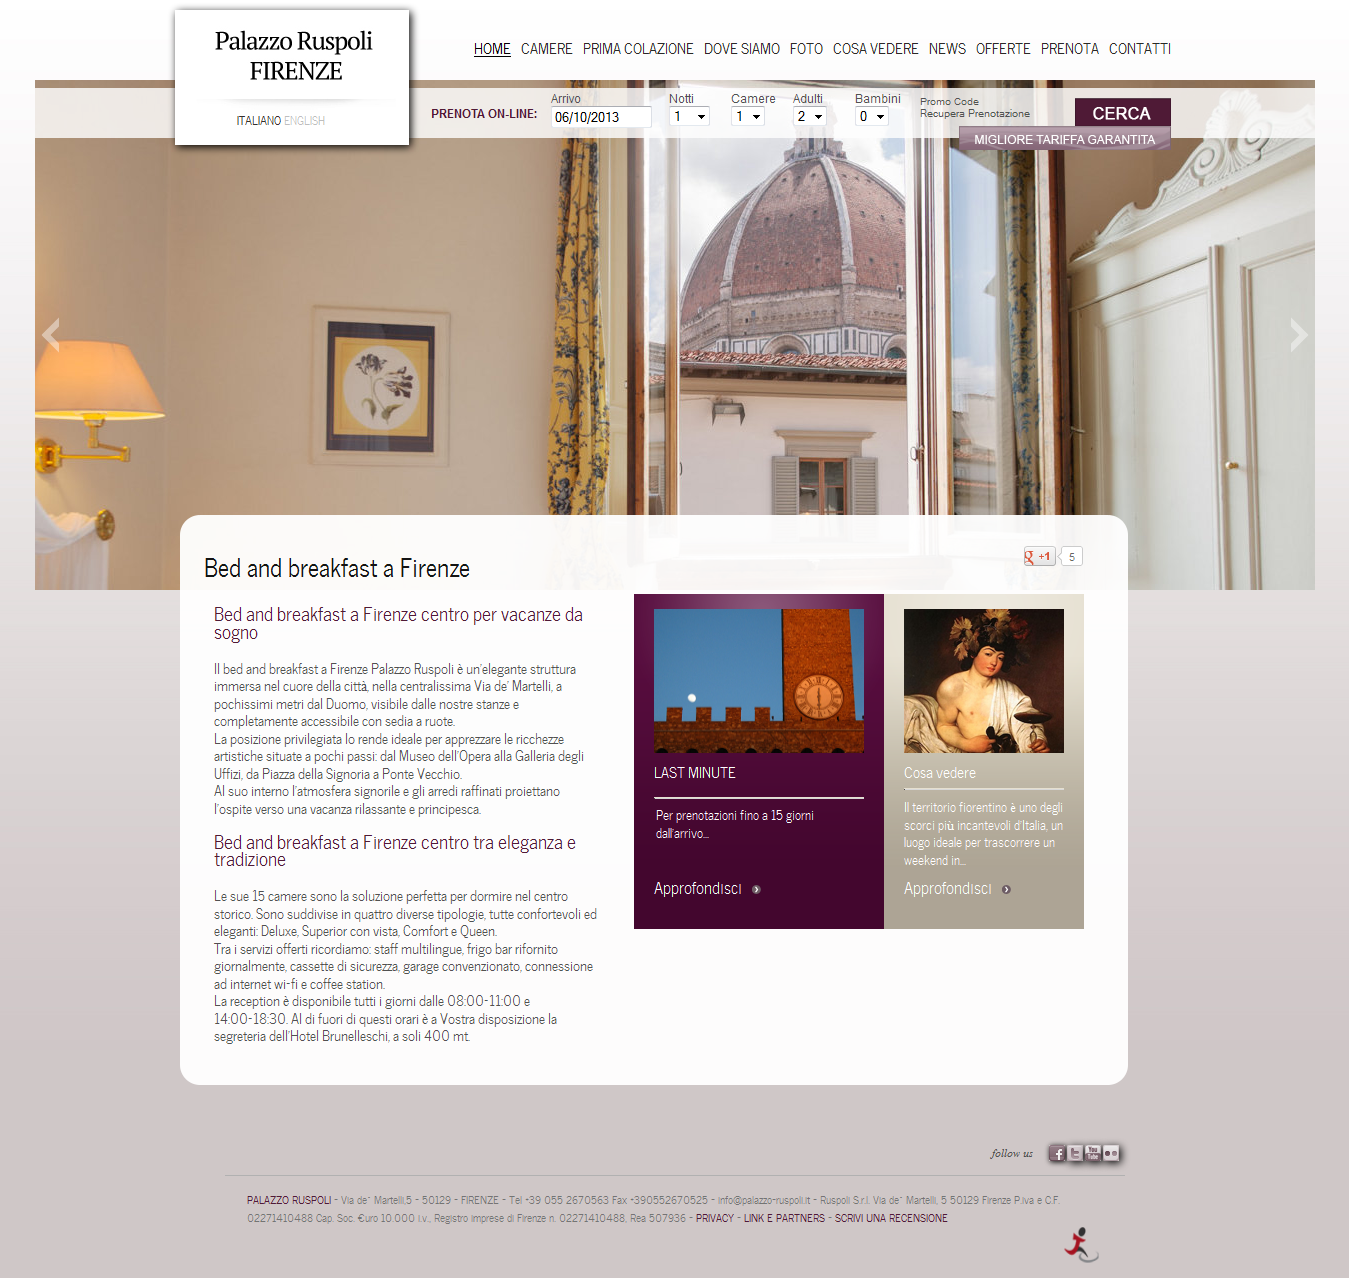 Palazzo Ruspoli Web site